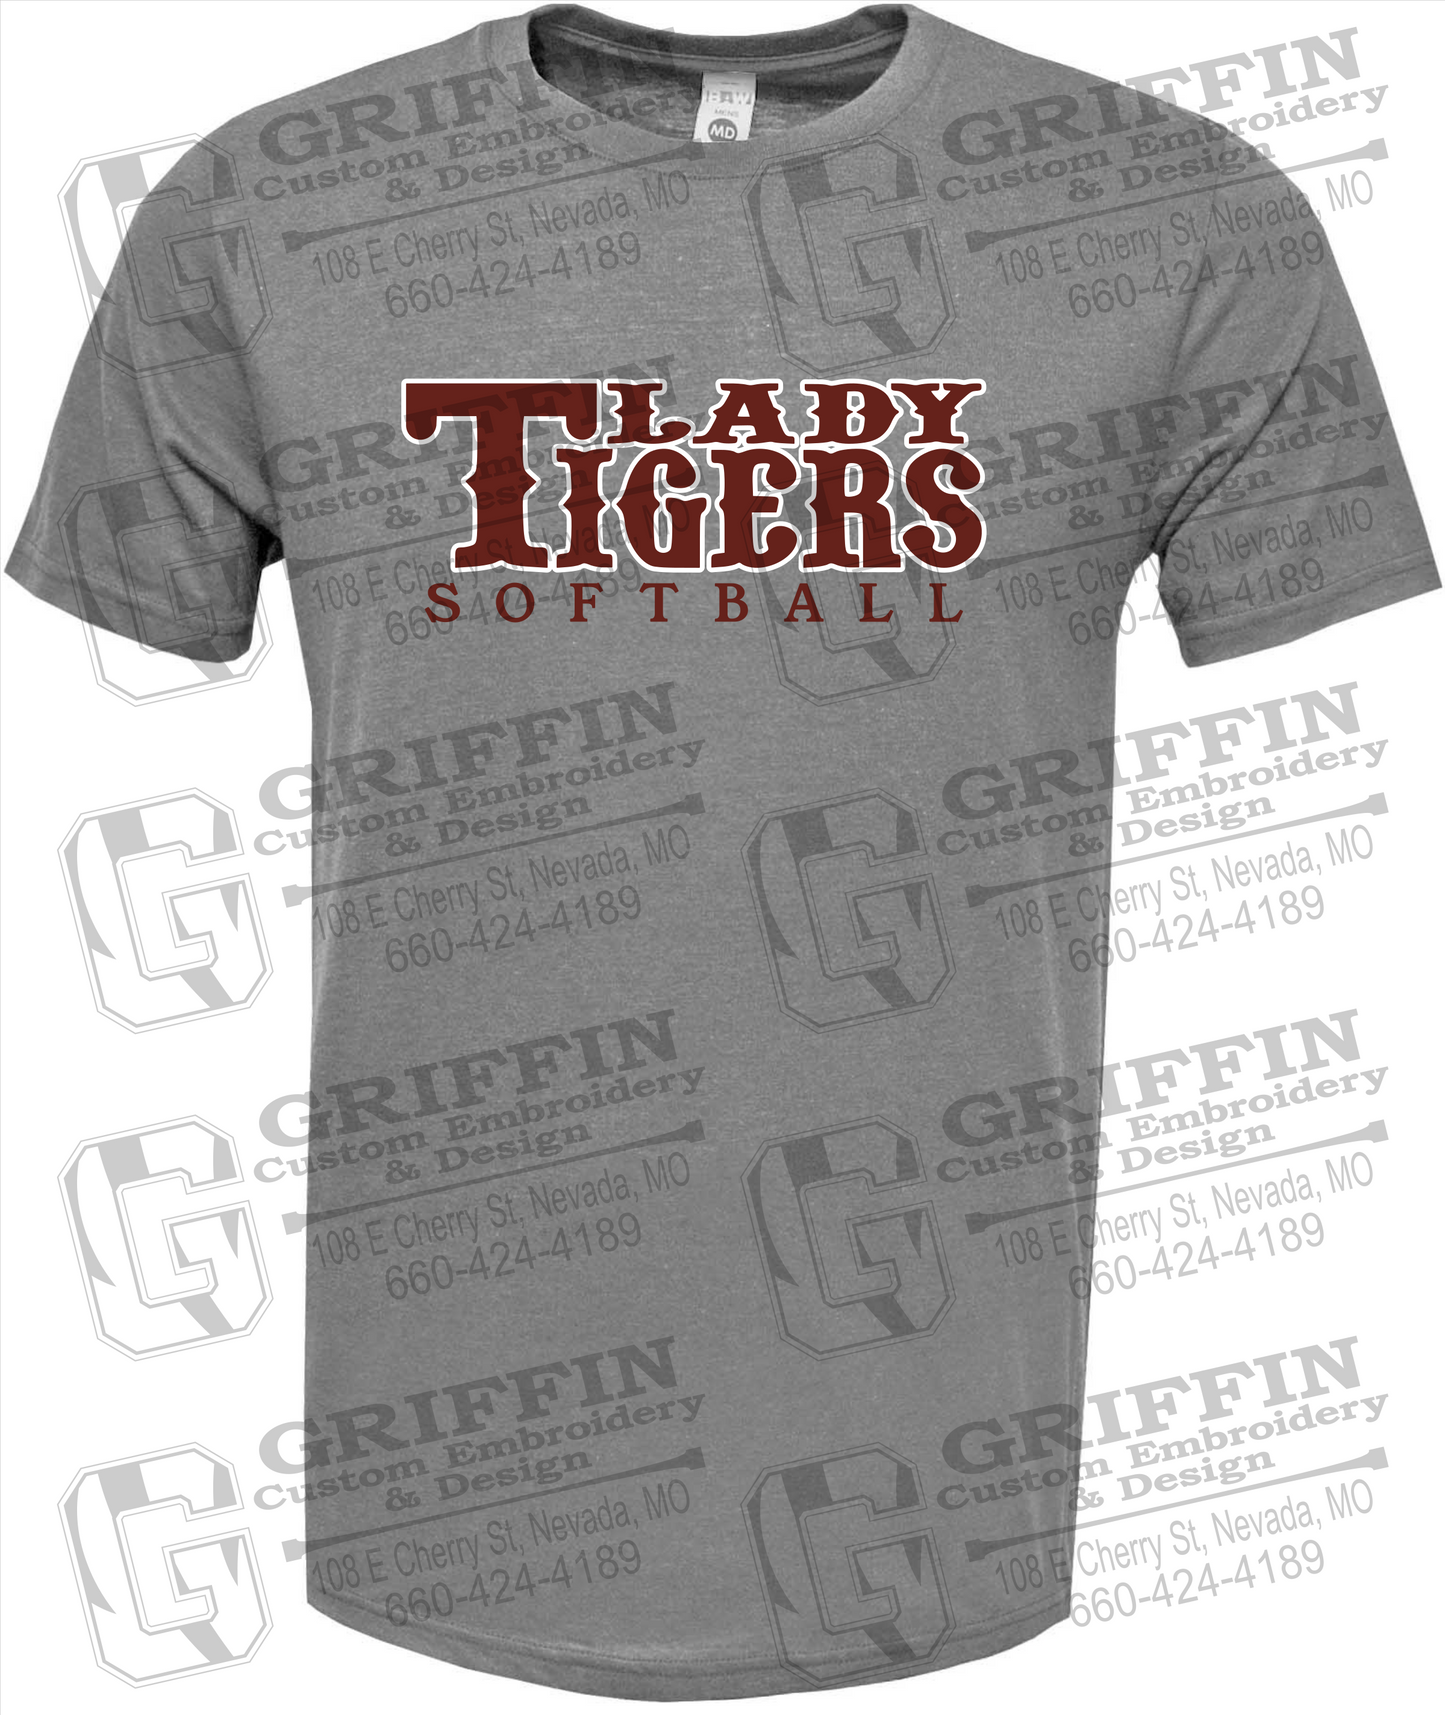 Nevada Tigers 24-F Short Sleeve T-Shirt - Softball